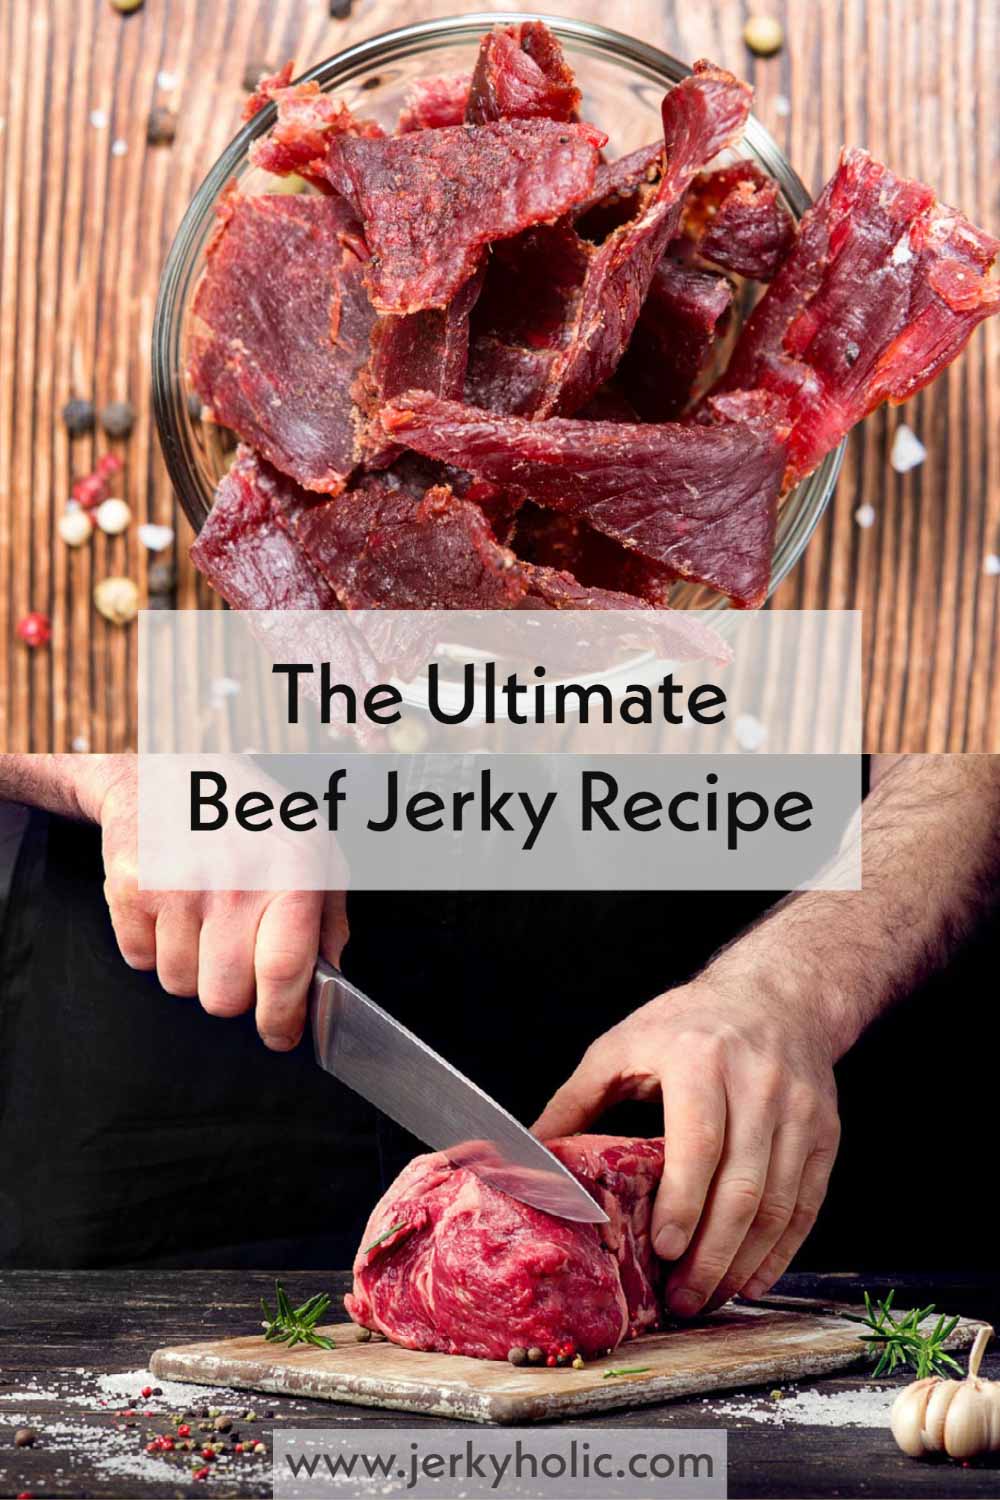 The Ultimate Beef Jerky Recipe